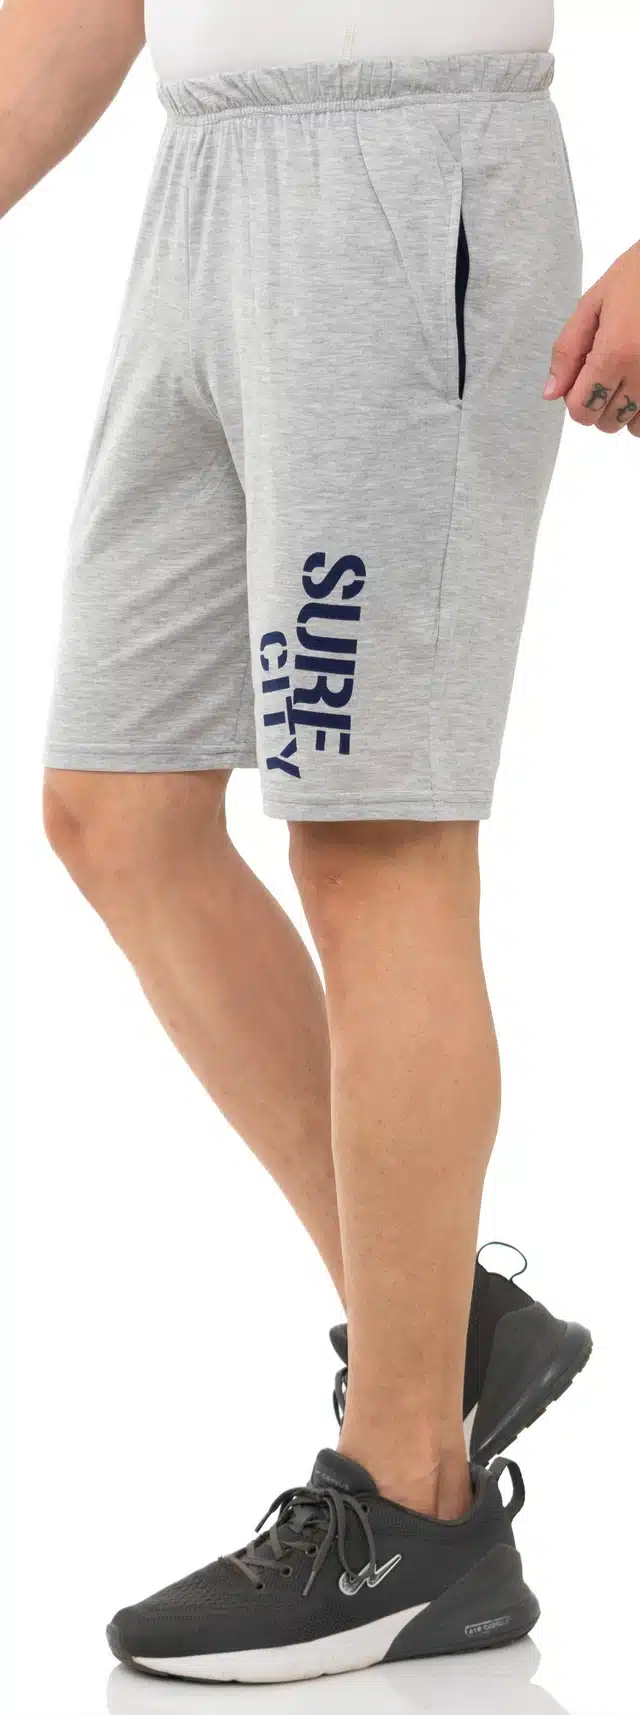 Shorts for Men (Grey, XXL)